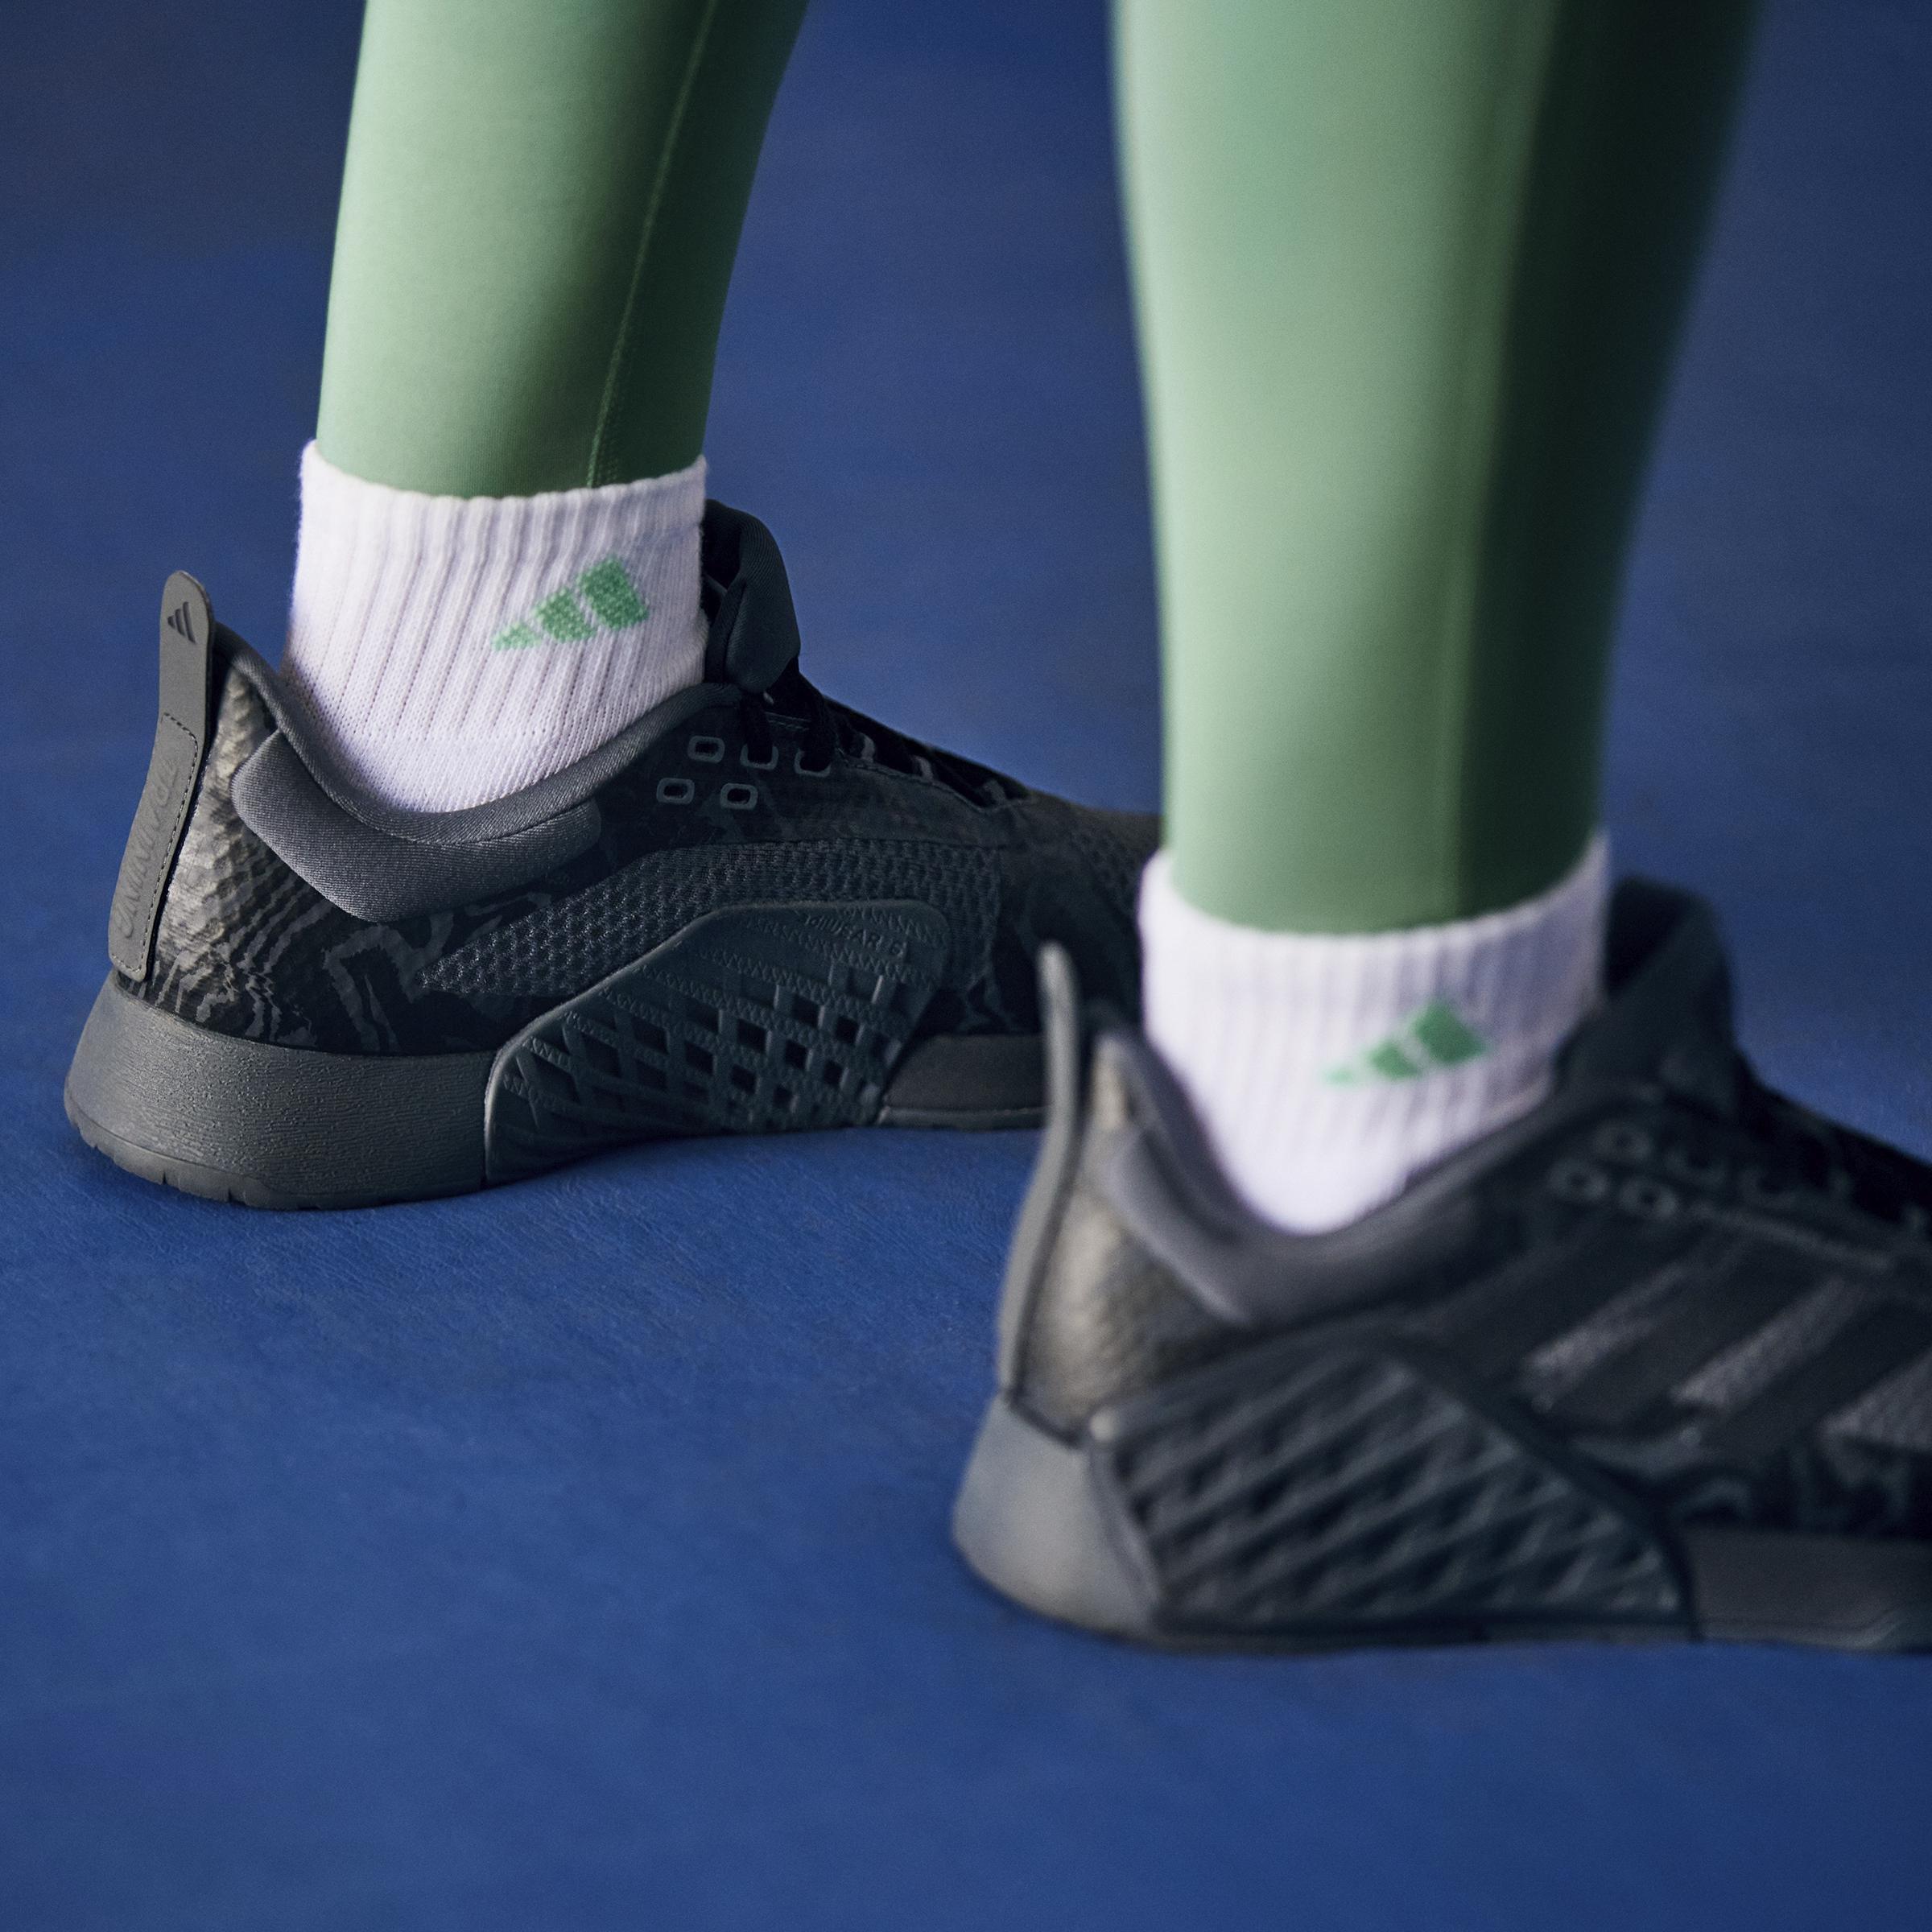 Adidas - Womens Droplet 2 Trainer, Black